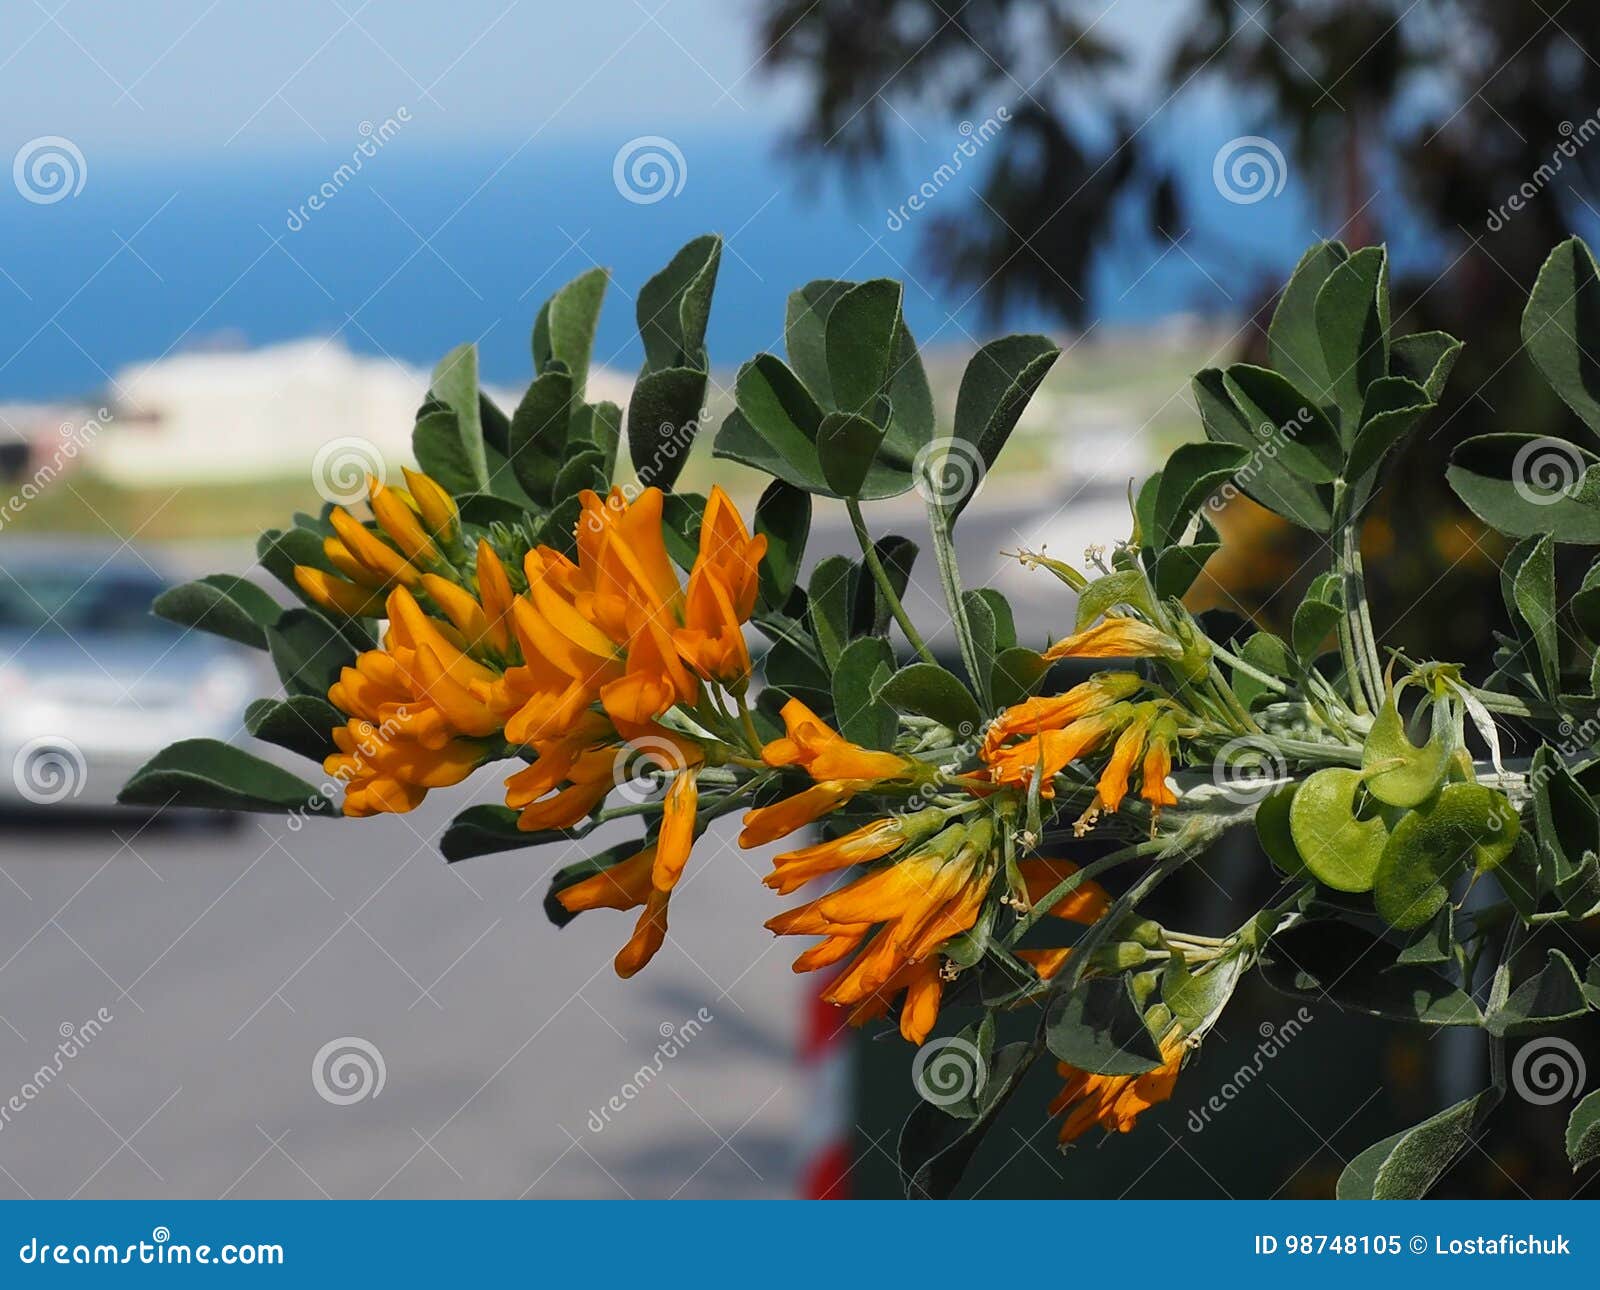 medicago arborea or tree medick flowers in crete greece